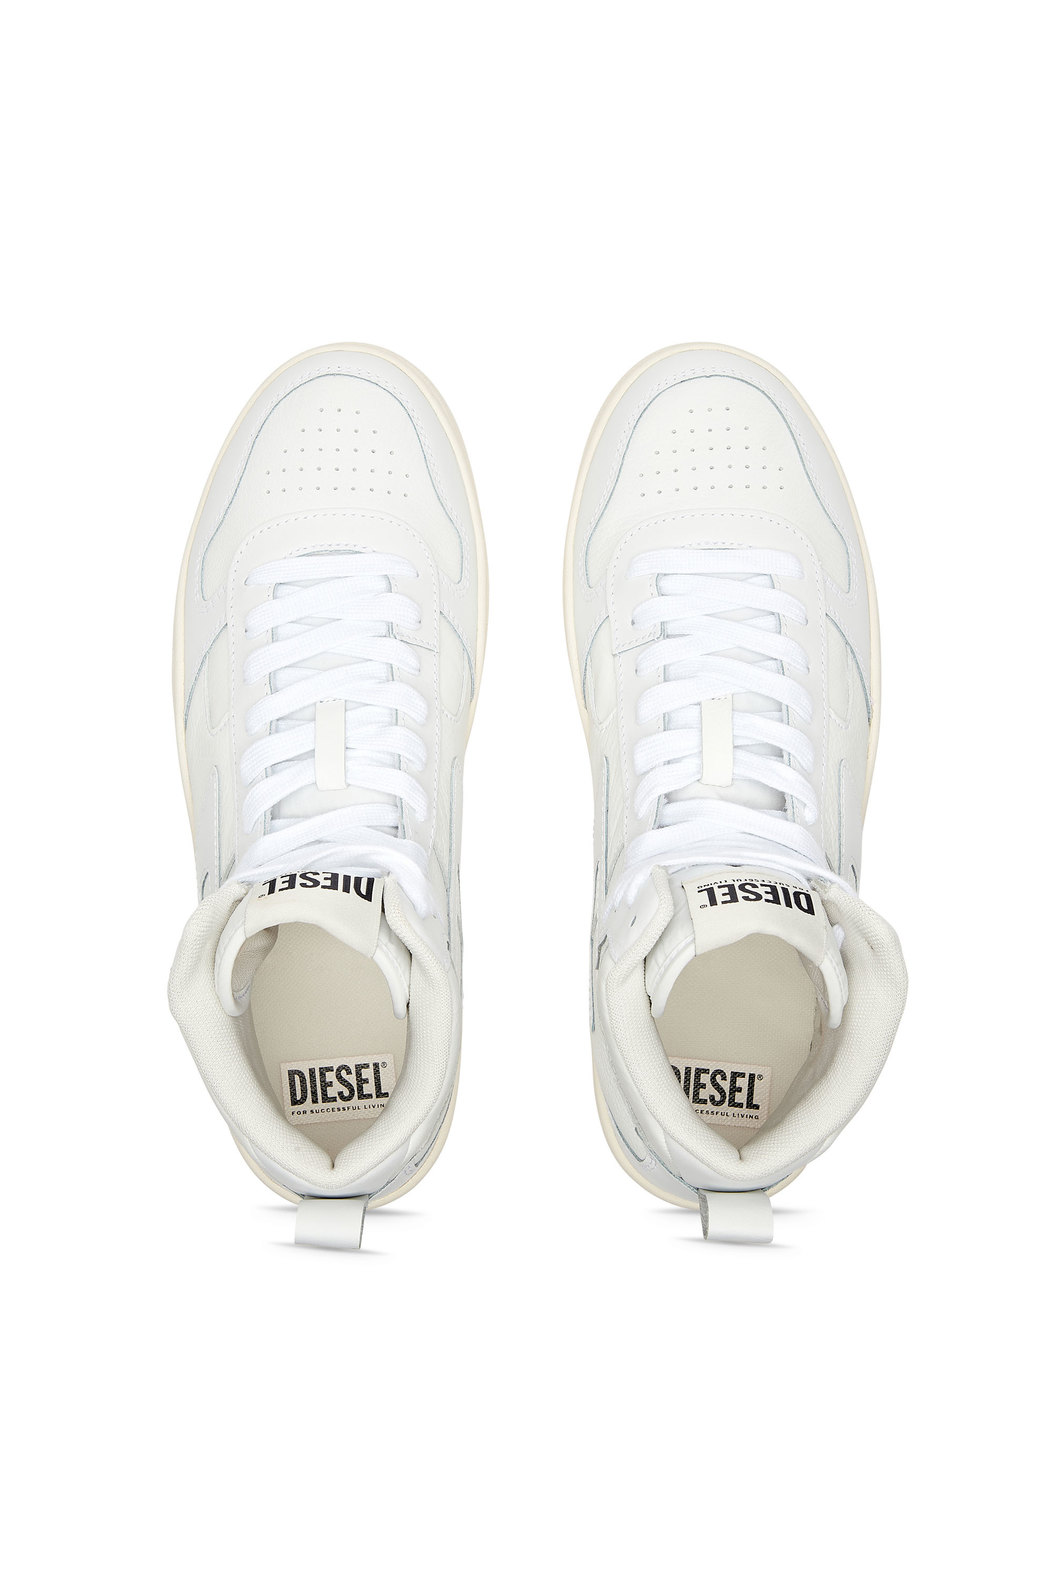 S-Ukiyo V2 Mid - High-top sneakers with D branding